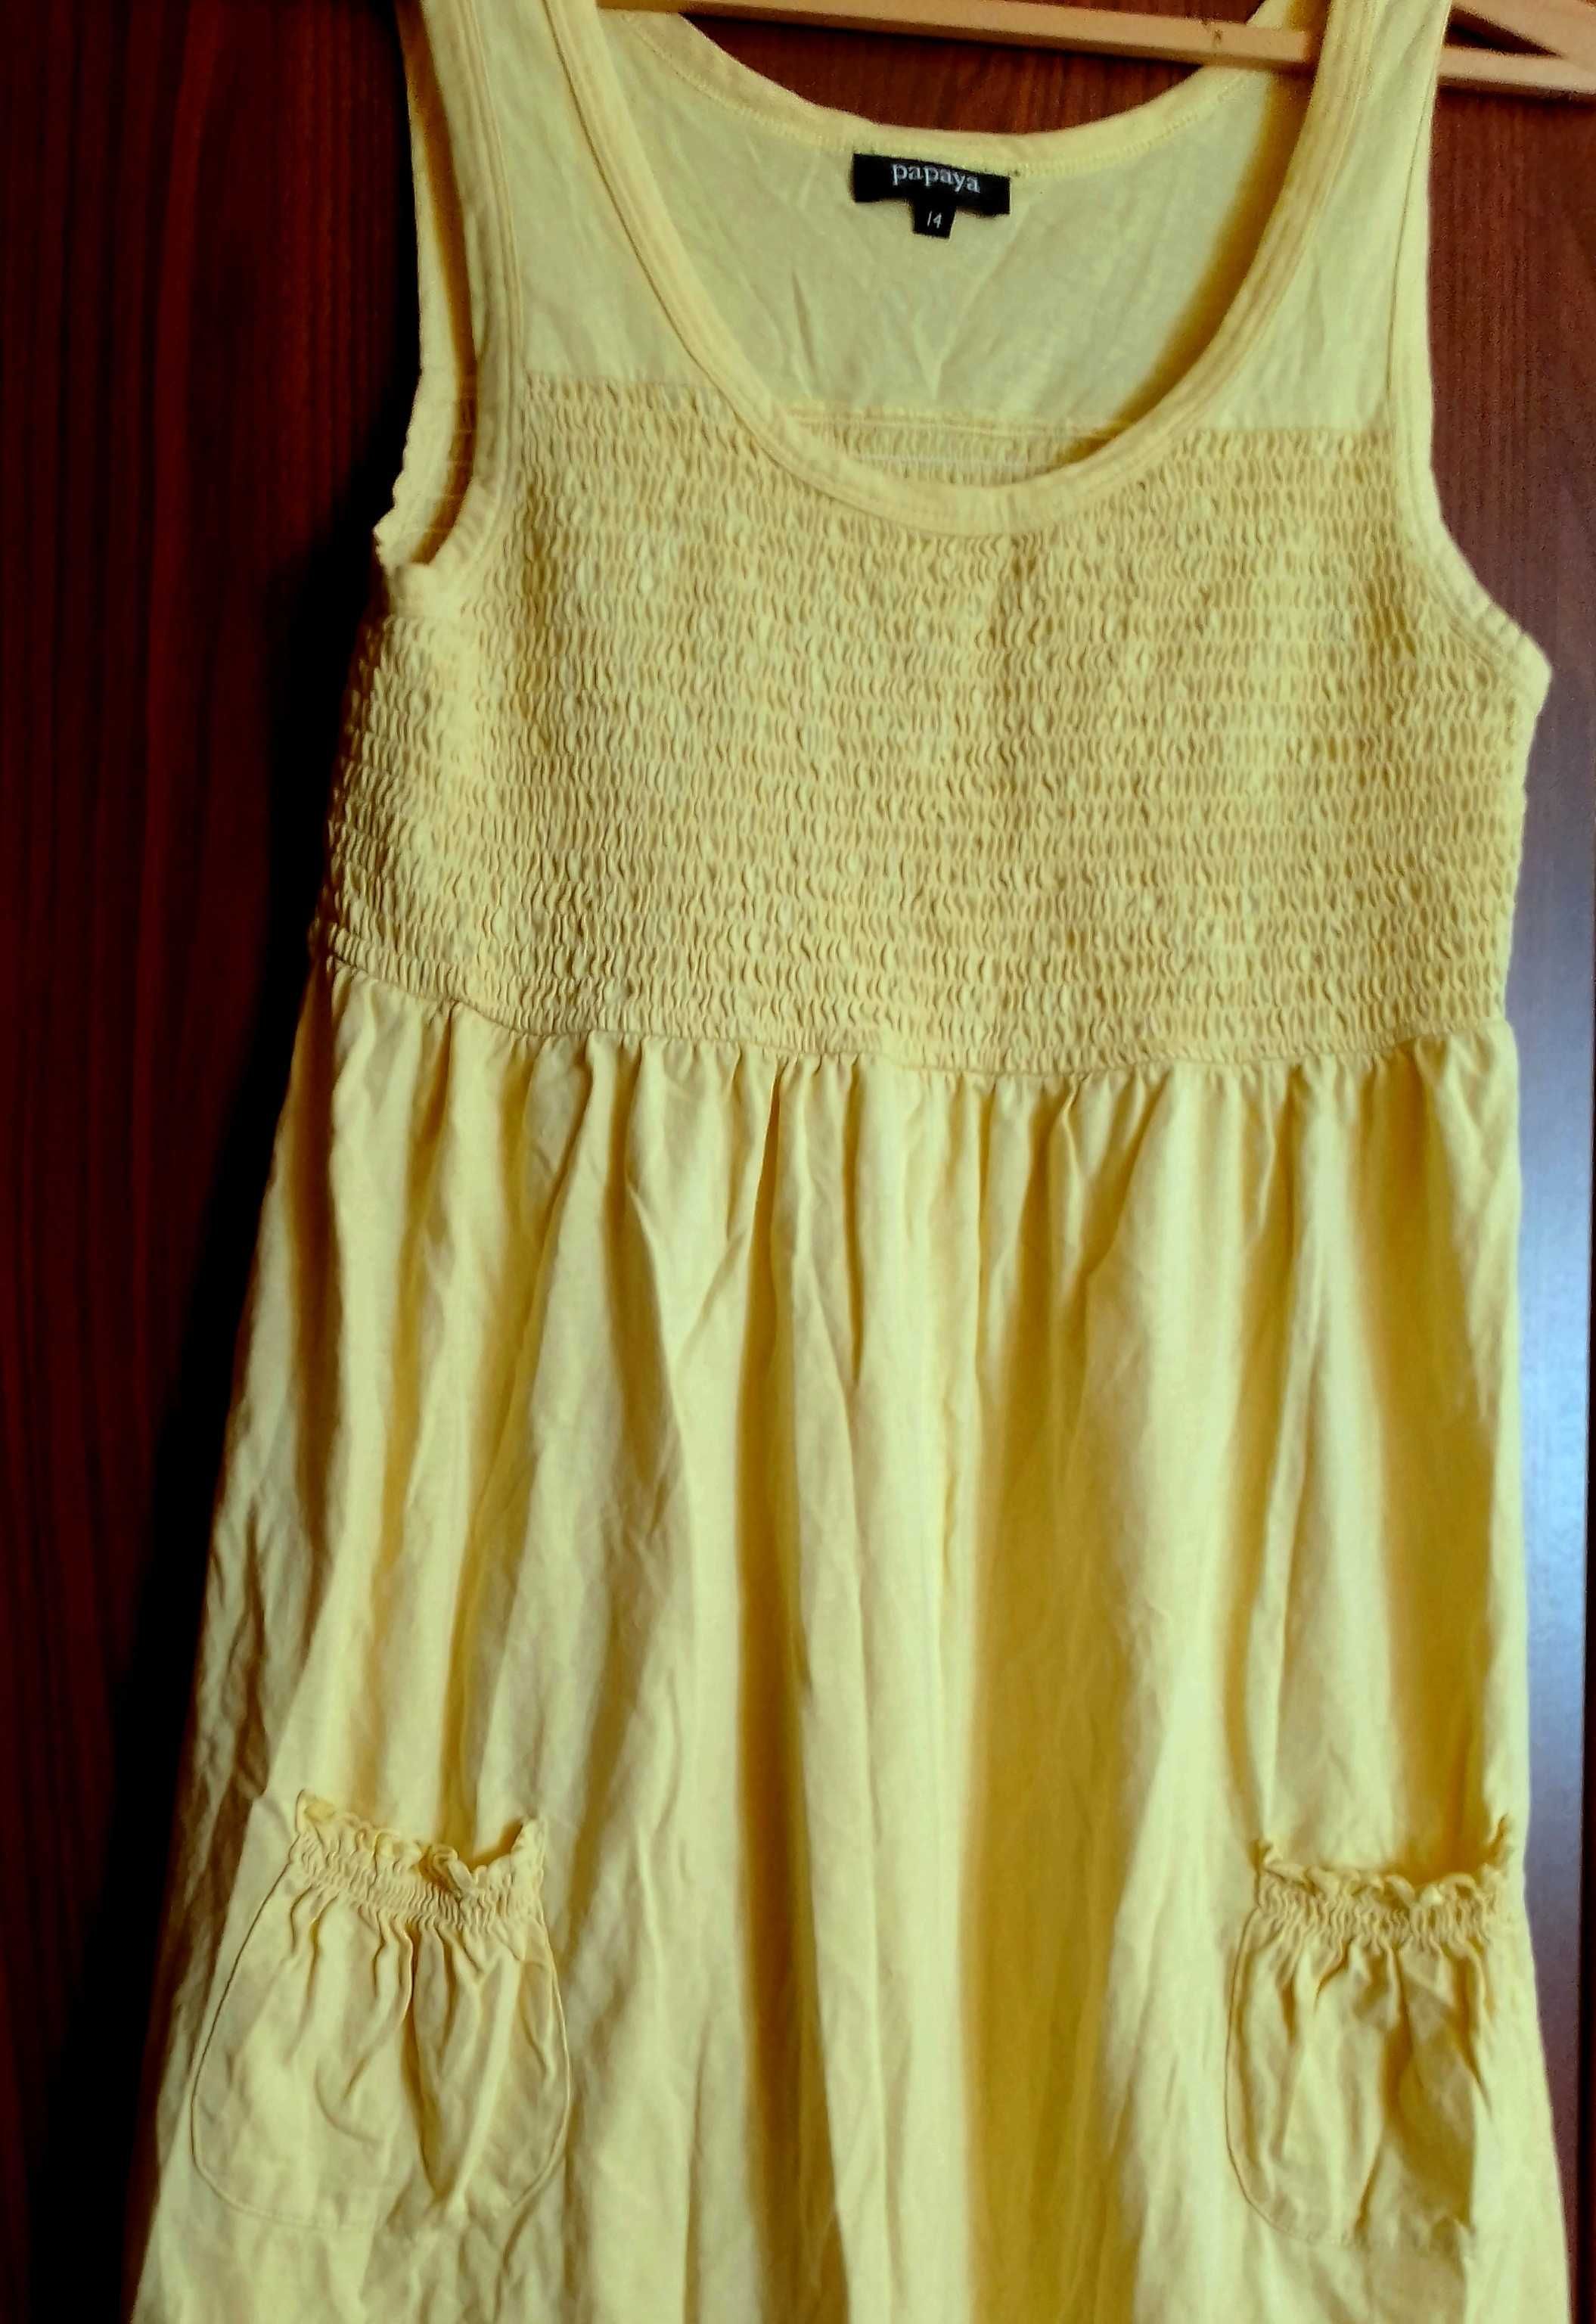 żółta sukienka lato ciążowa*PAPAYA*36 38 S/M